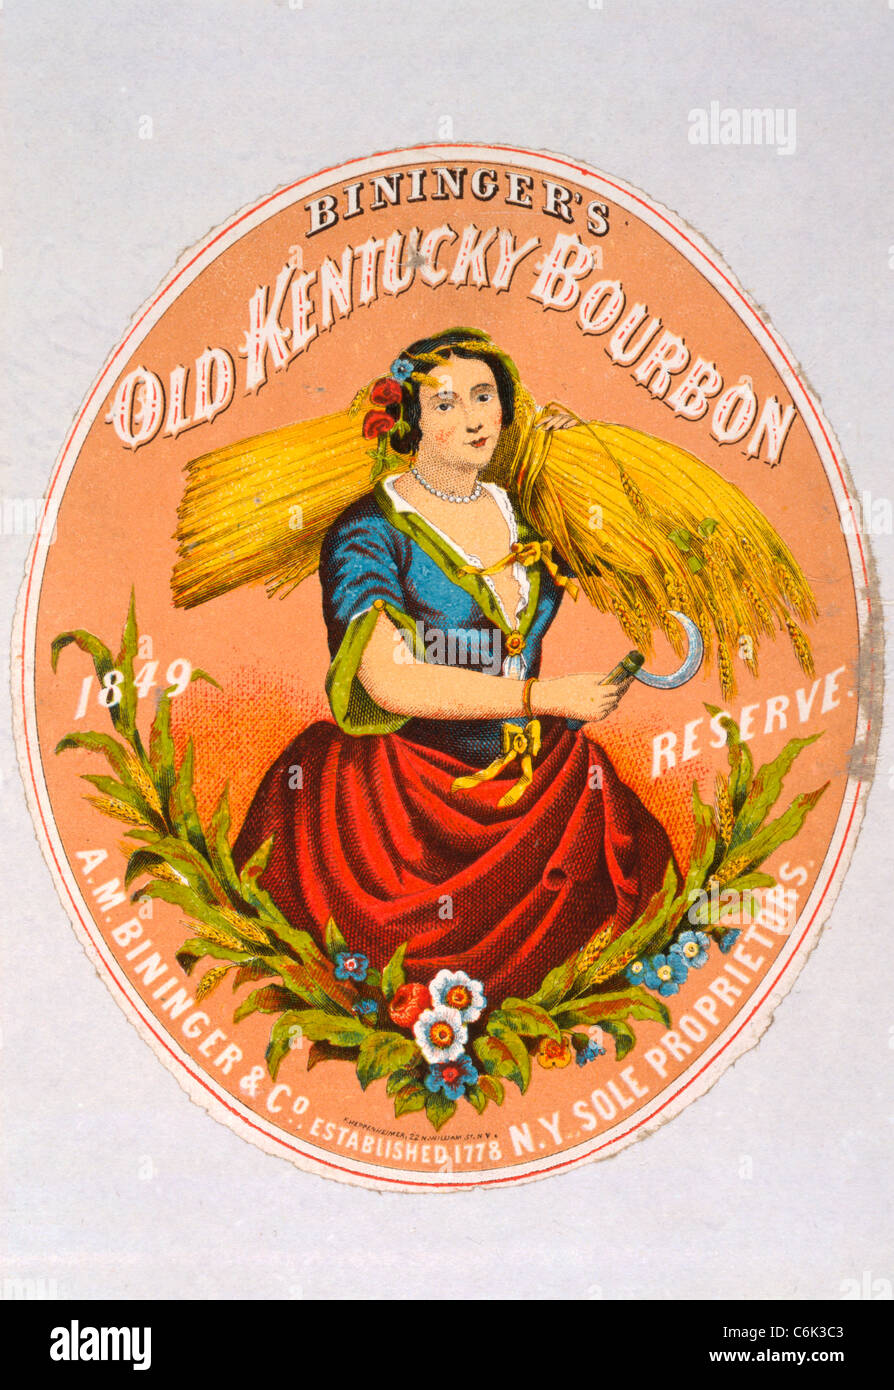 Bininger's Old Kentucky Bourbon, A.M. Bininger & Co., N.Y. sole proprietors / F. Heppenheimer, N.Y. 1860 Bourbon ad Stock Photo